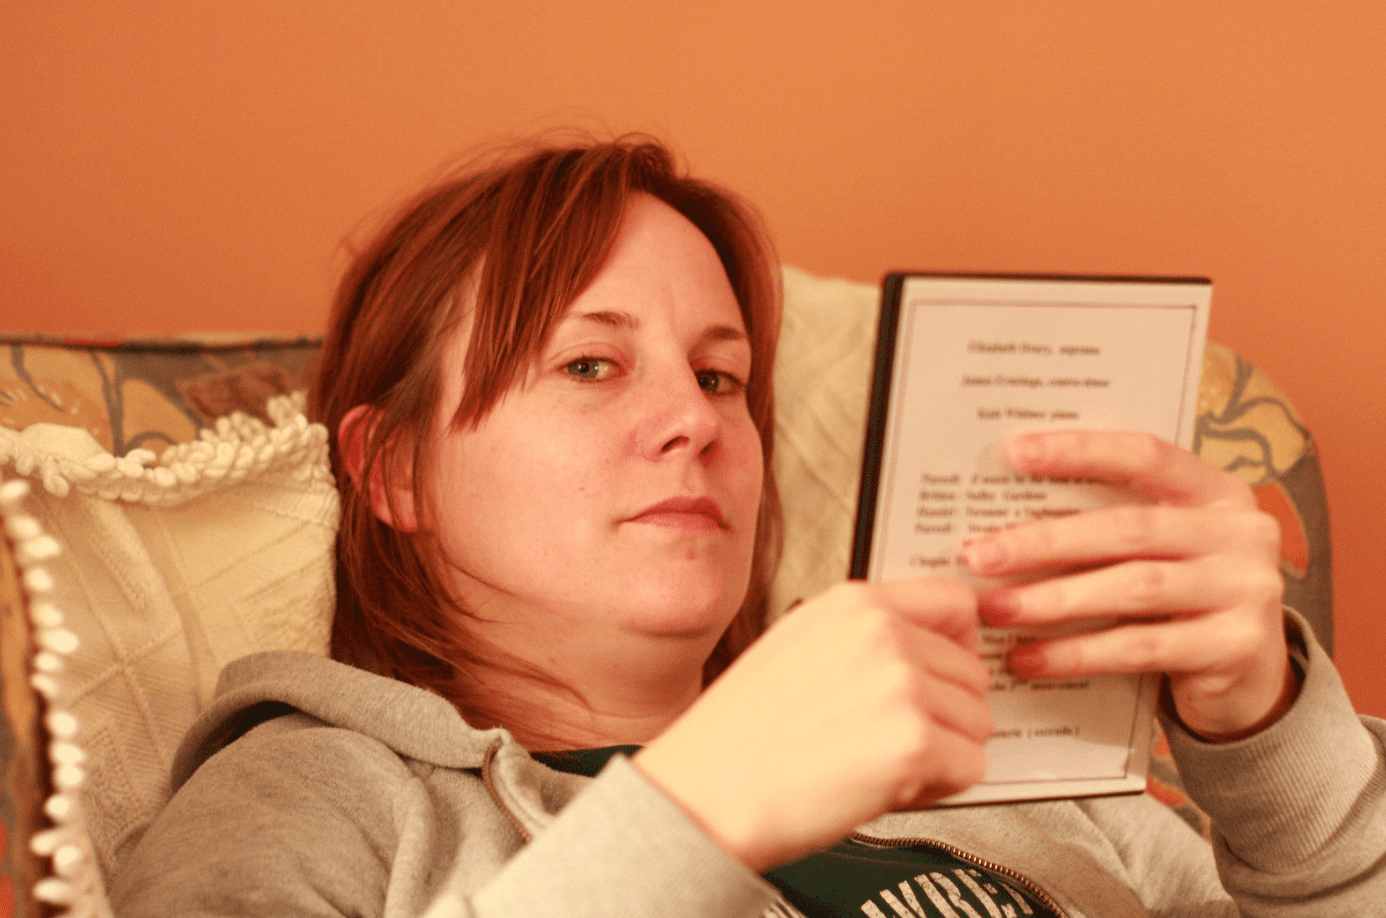 A woman reading a book. | Source: flickr.com